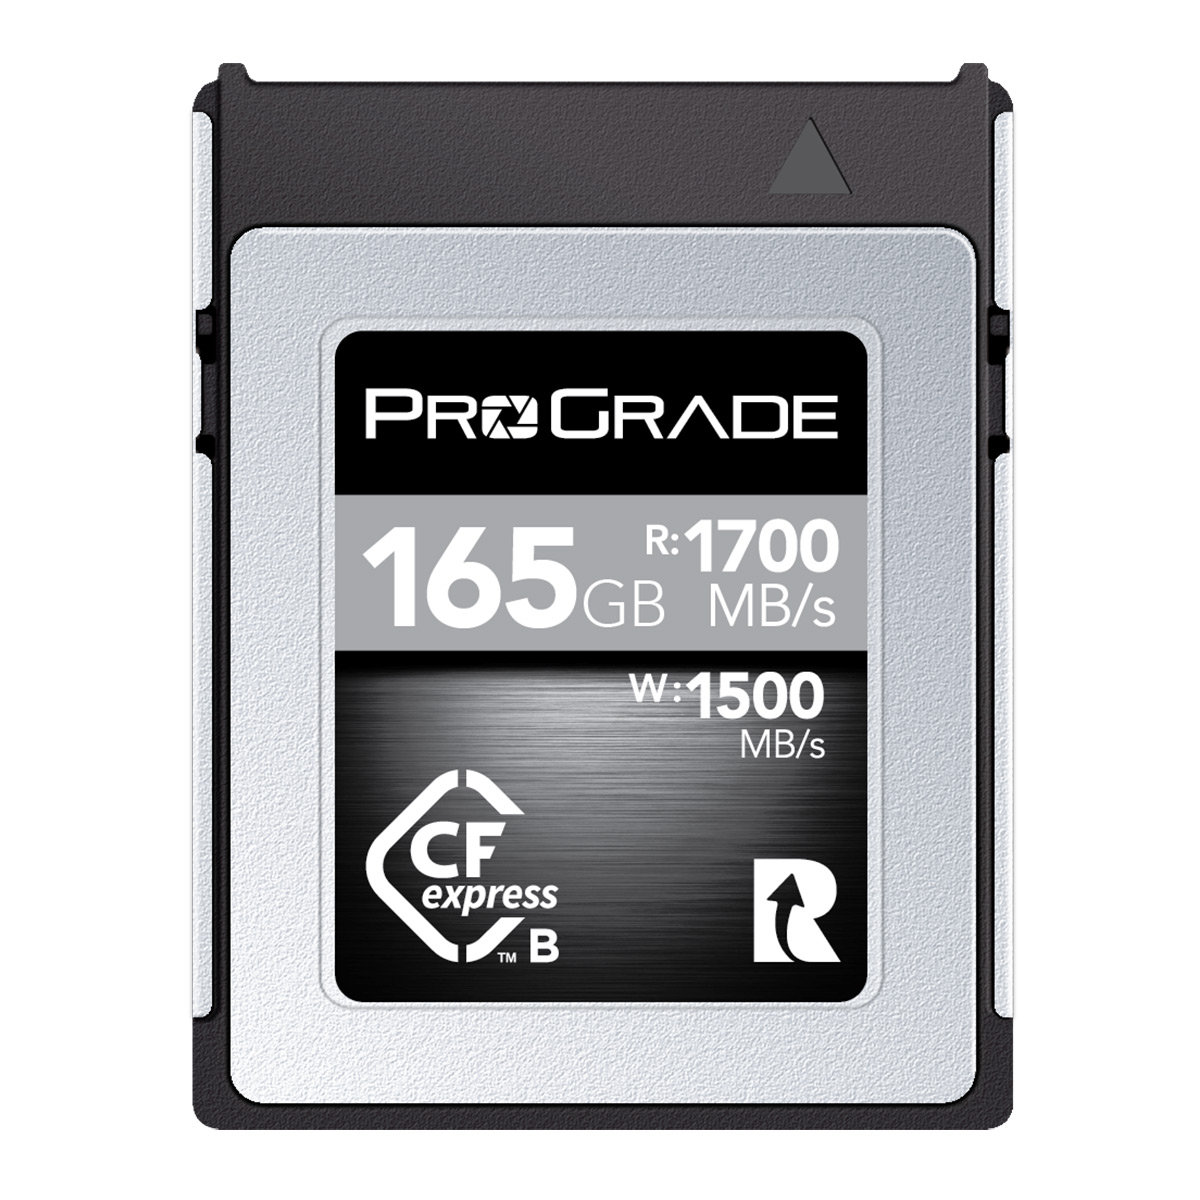 ProGrade 165GB CFexpress product image